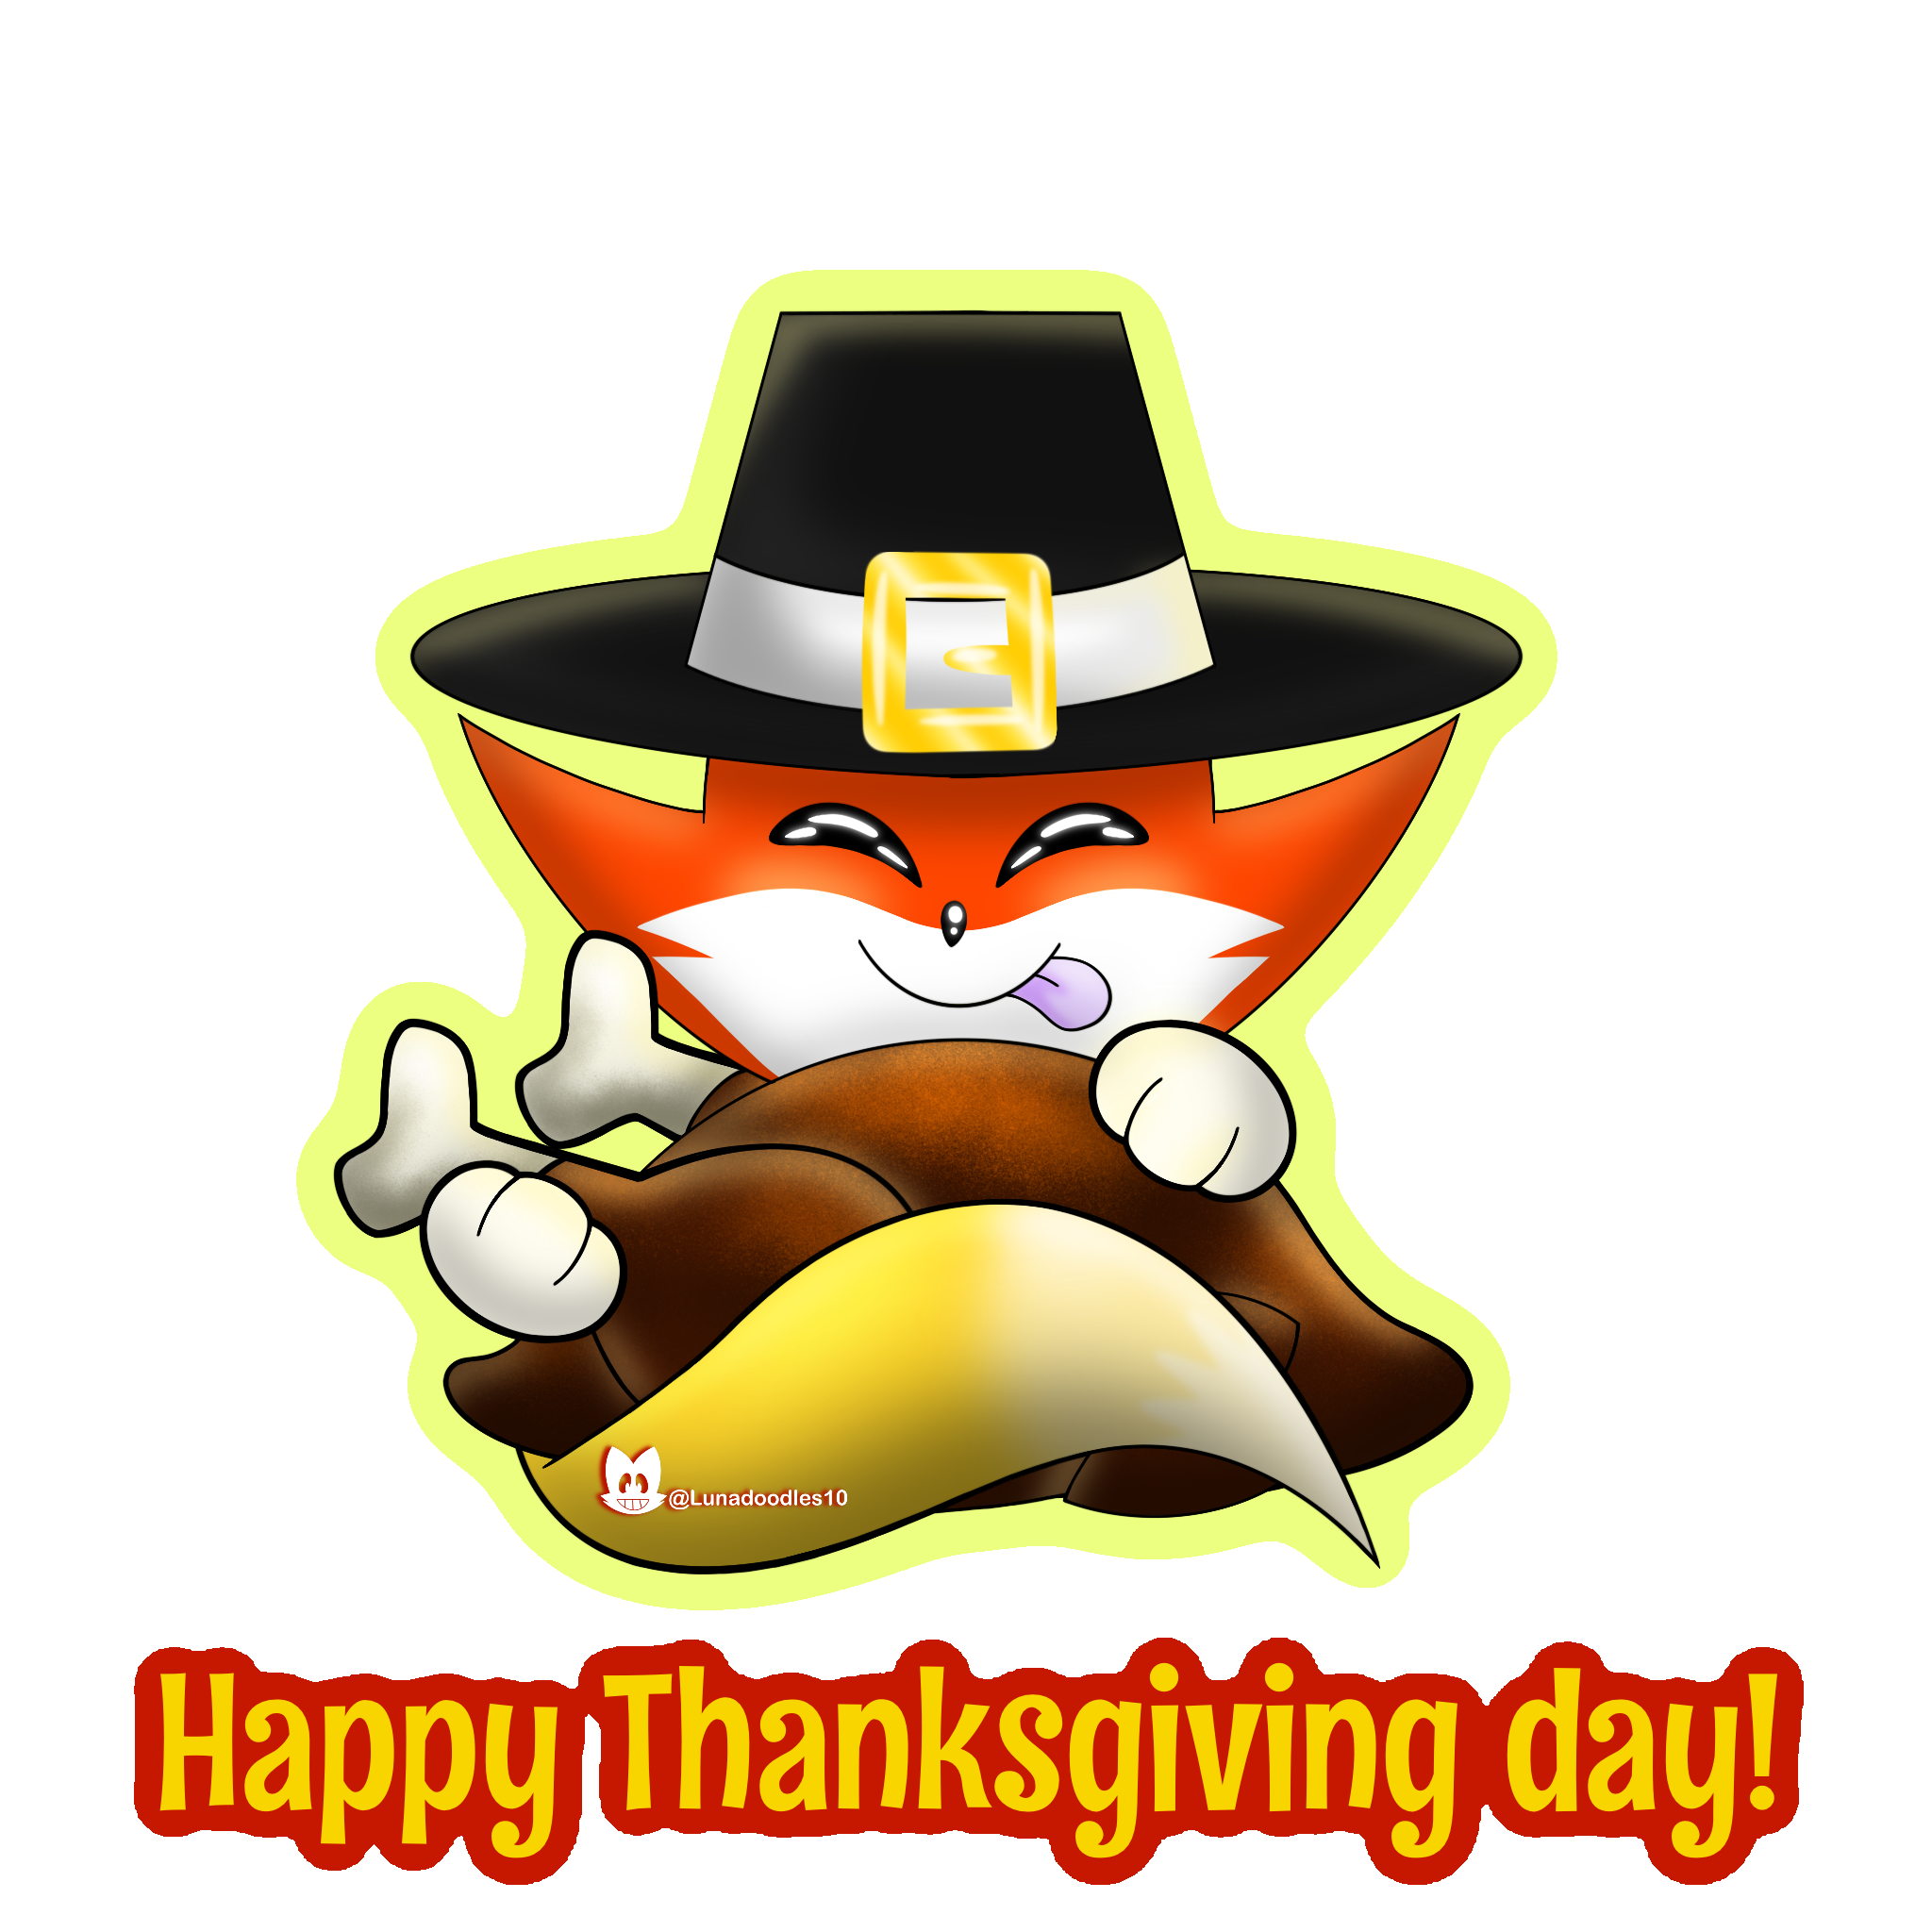 Happy Thanksgiving Day 2023 — Weasyl